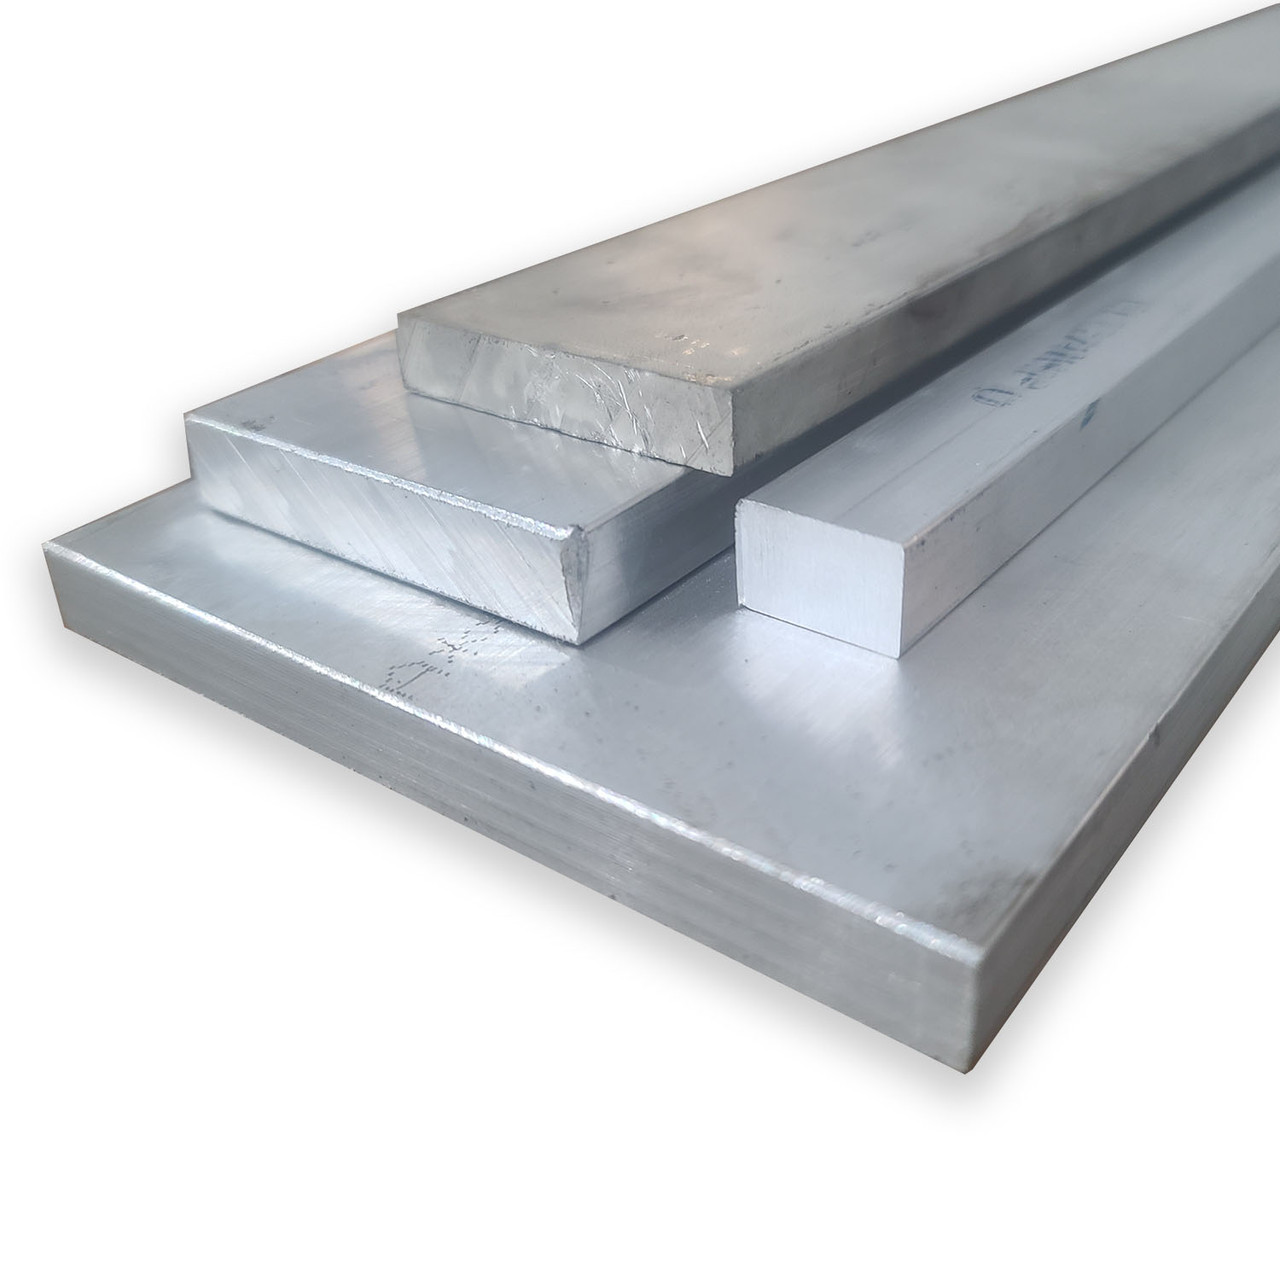 1.25" x 2" x 36", 2024-T351 Aluminum Flat Bar